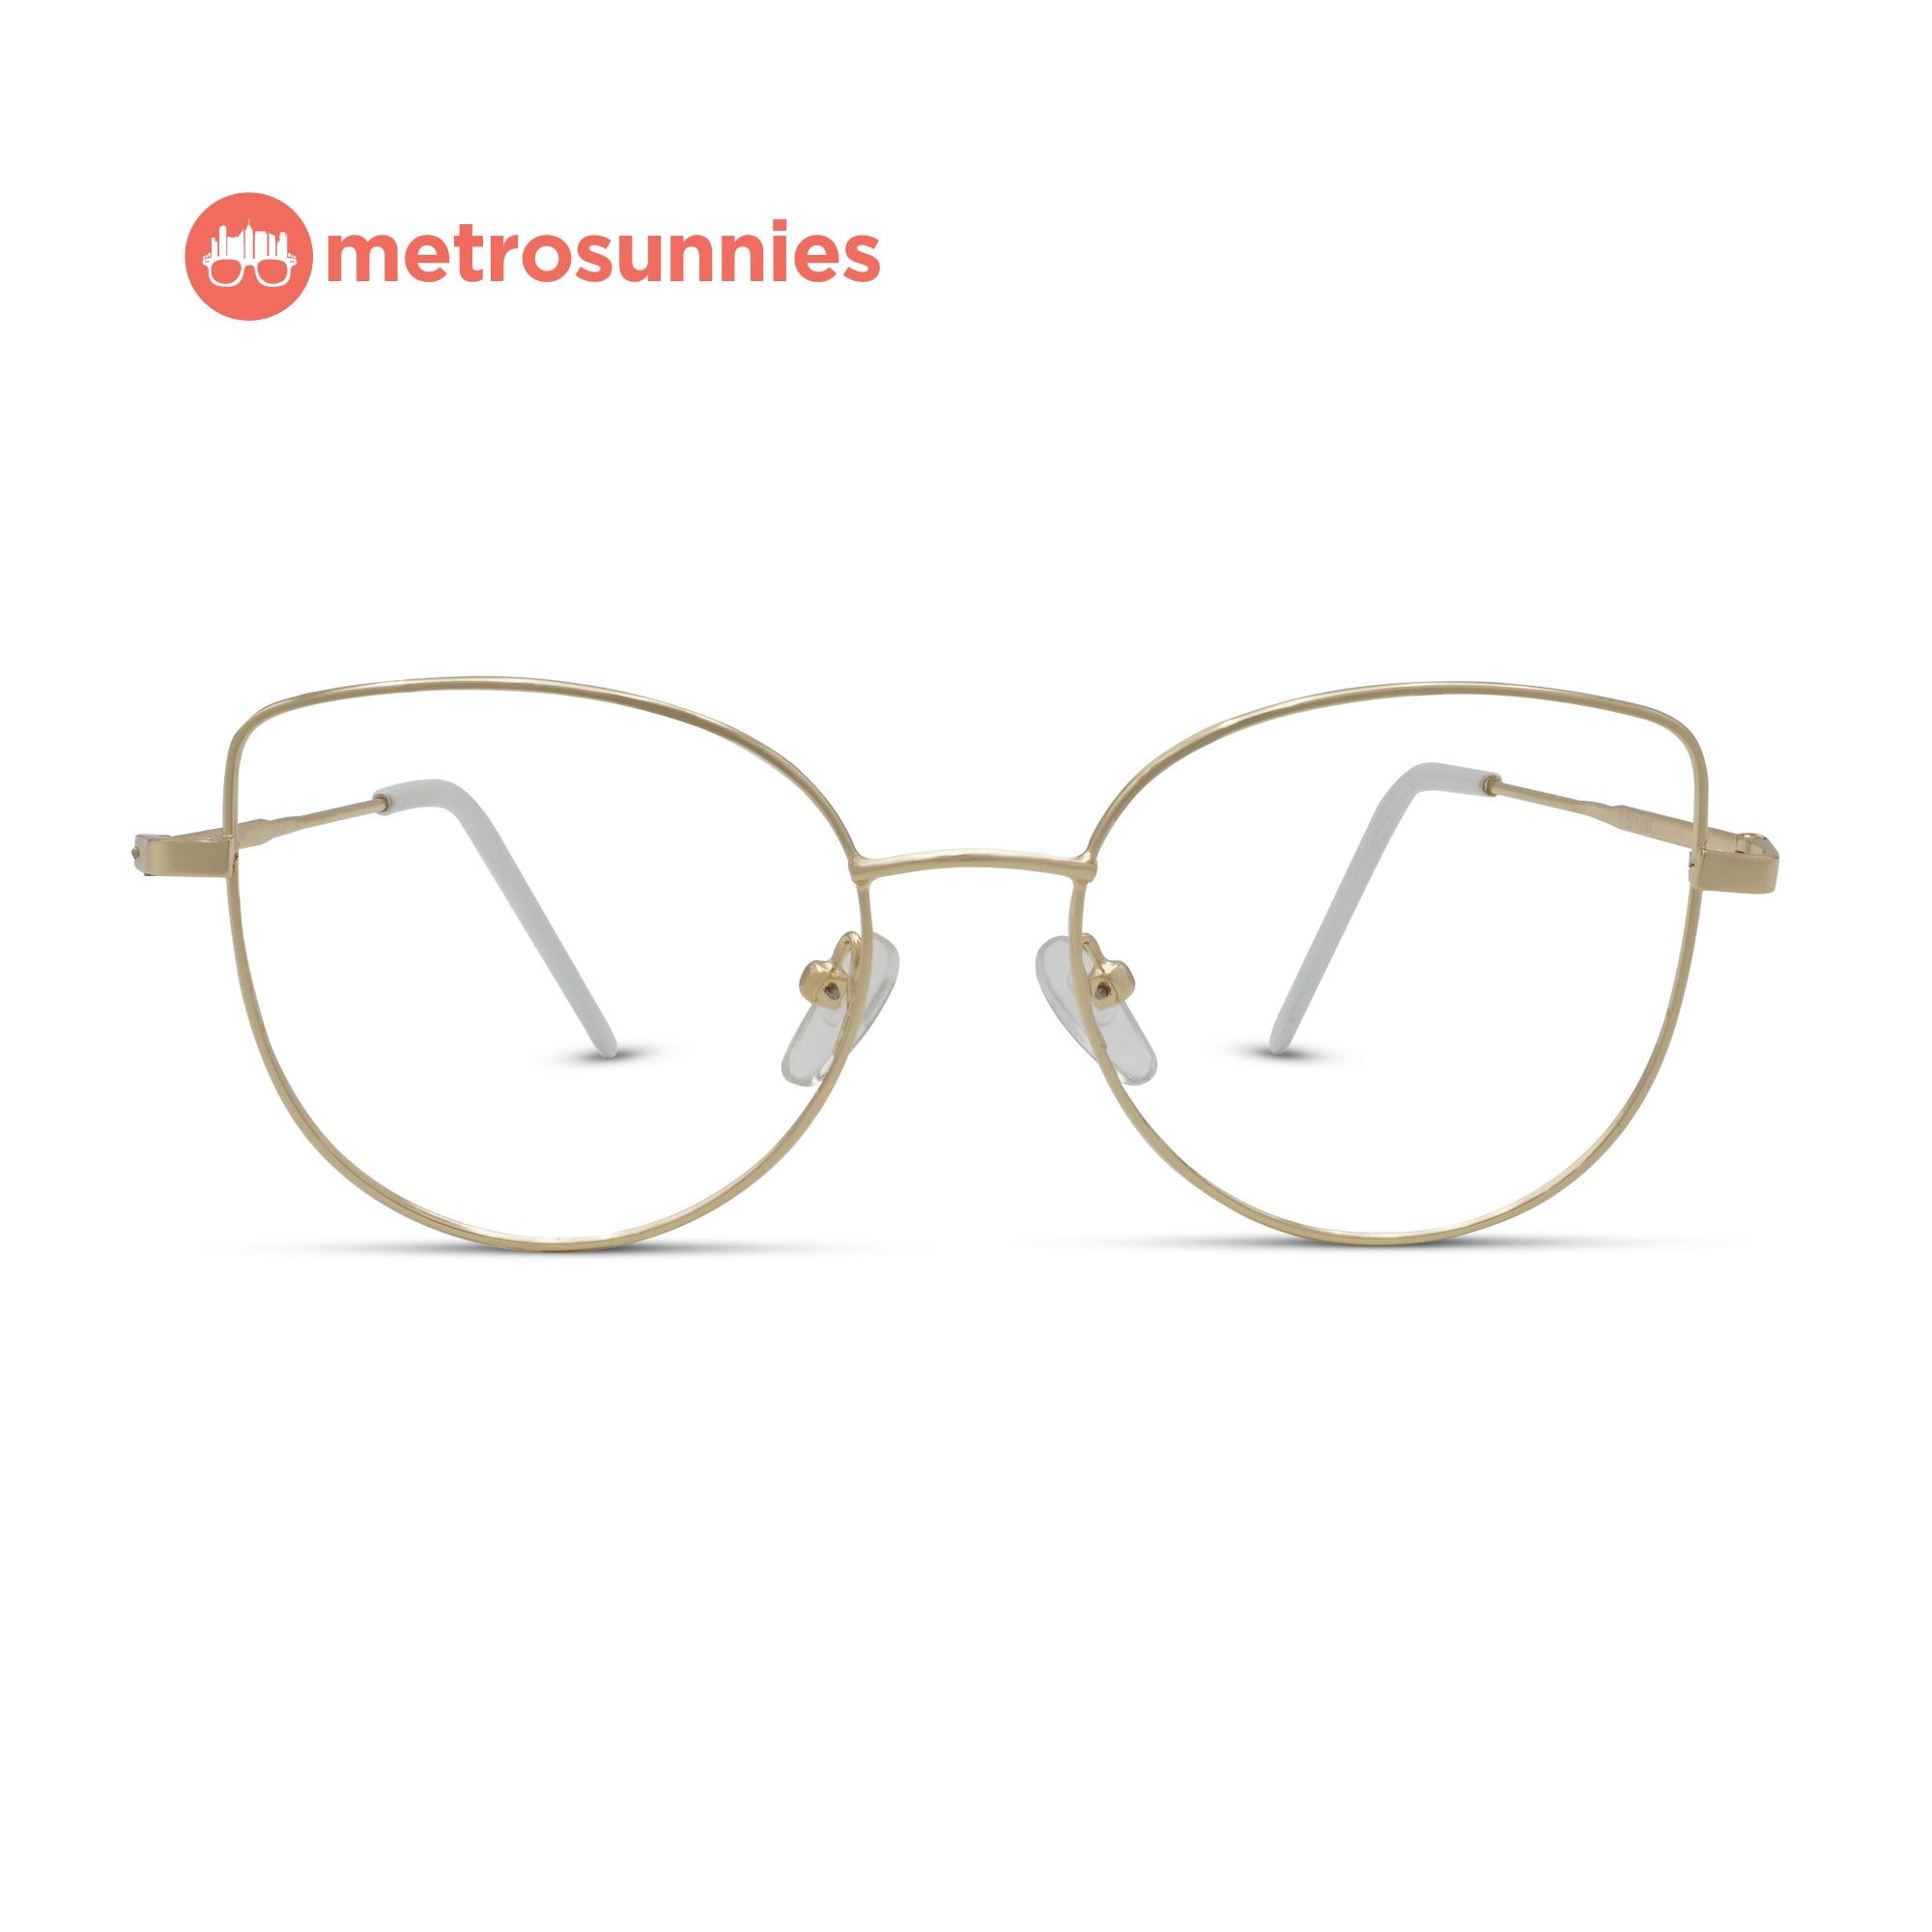 MetroSunnies Liv Specs (Gold) / Replaceable Lens / Eyeglasses for Men and Women